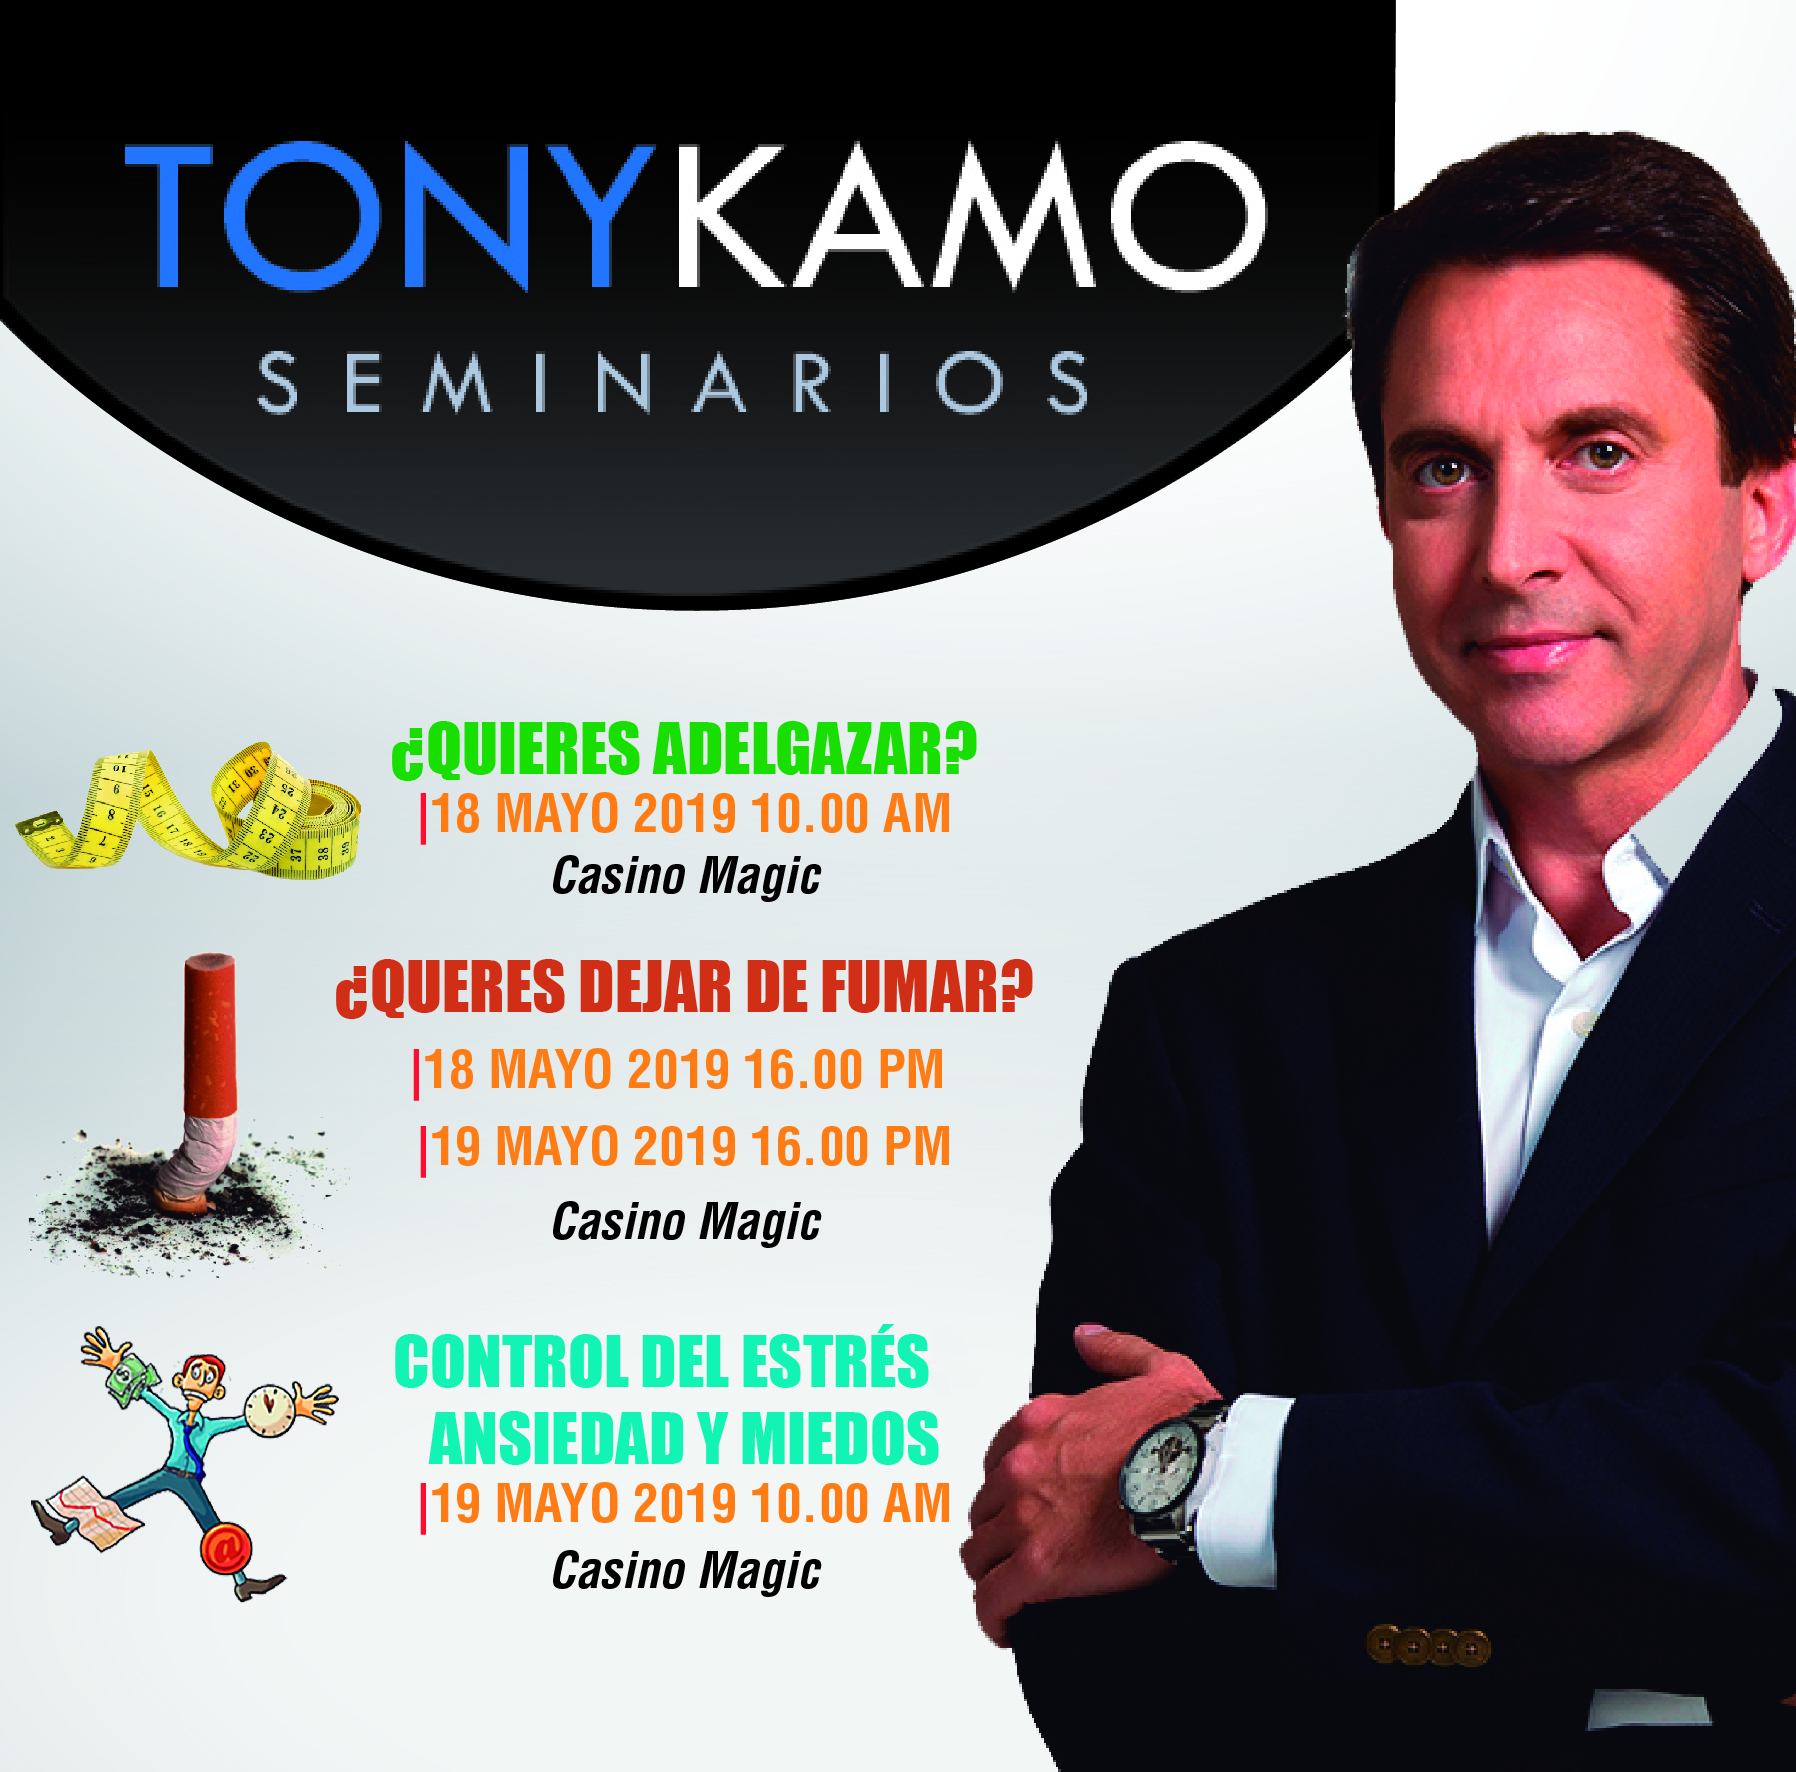 Tony-Kamo-2019-seminarios-01.jpg